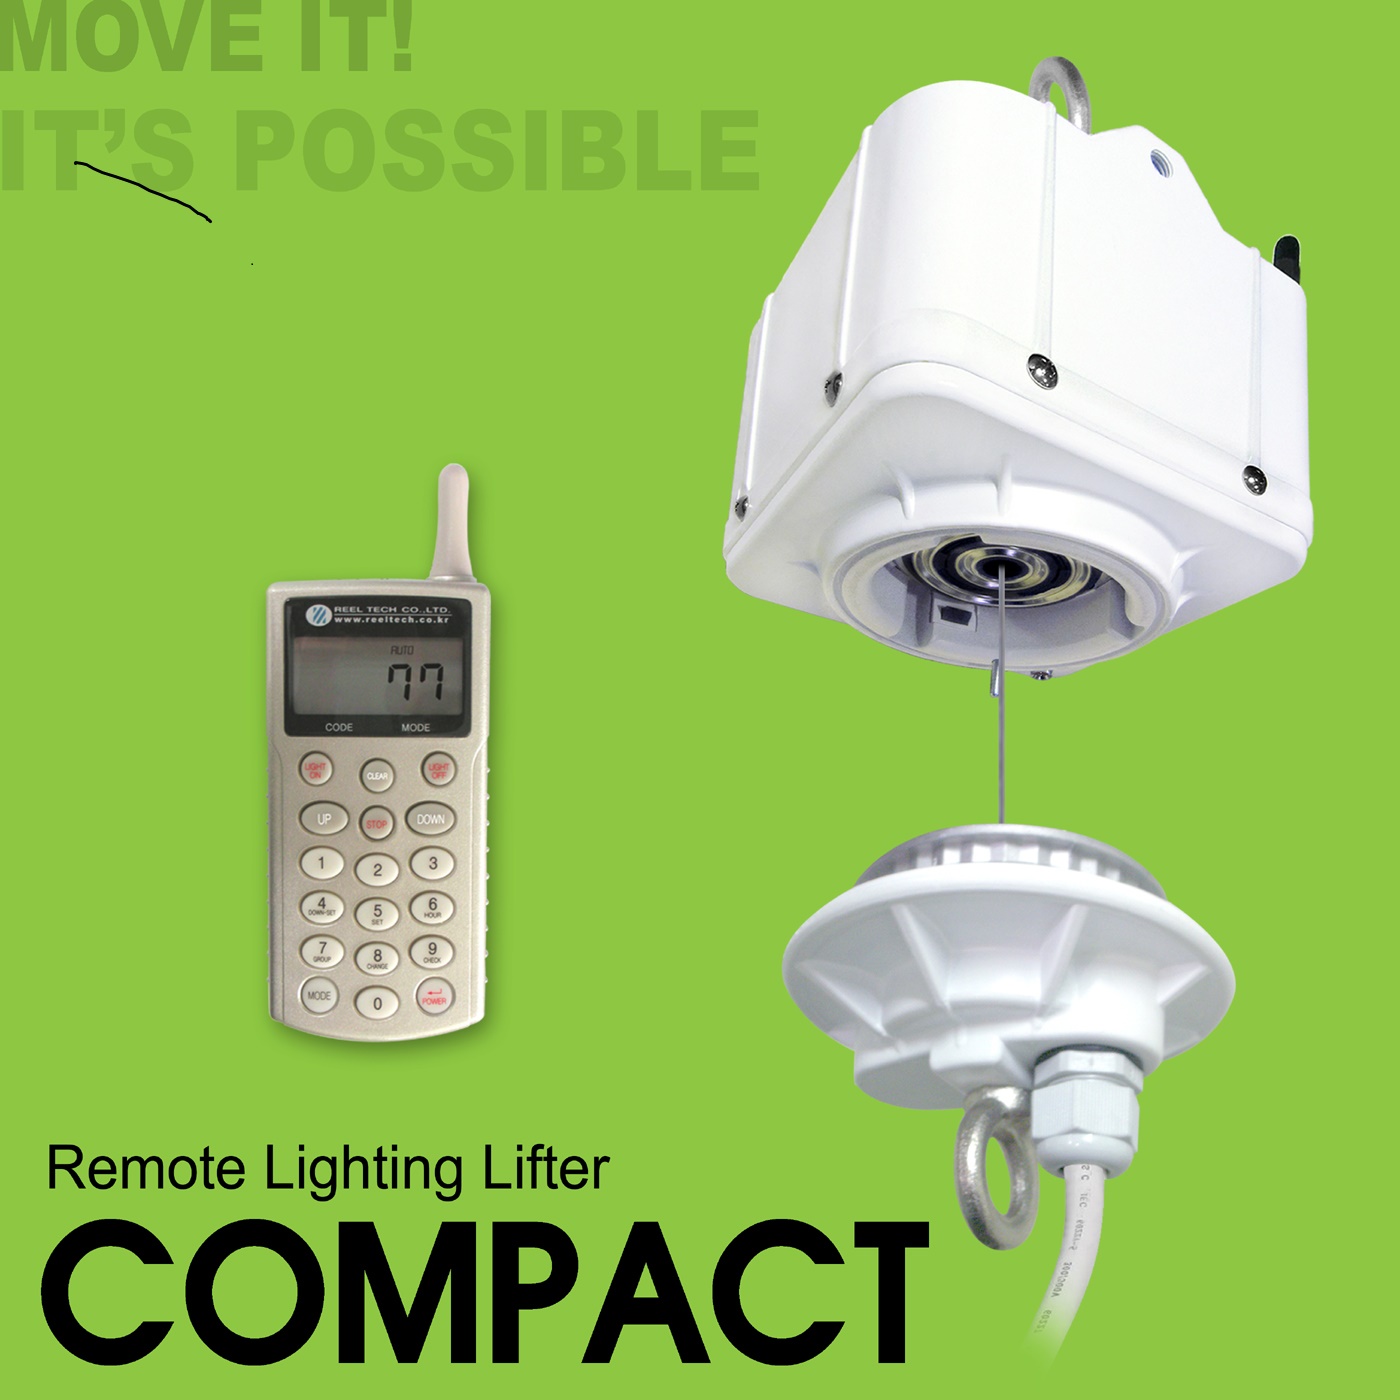 Remote Lighting Lifter